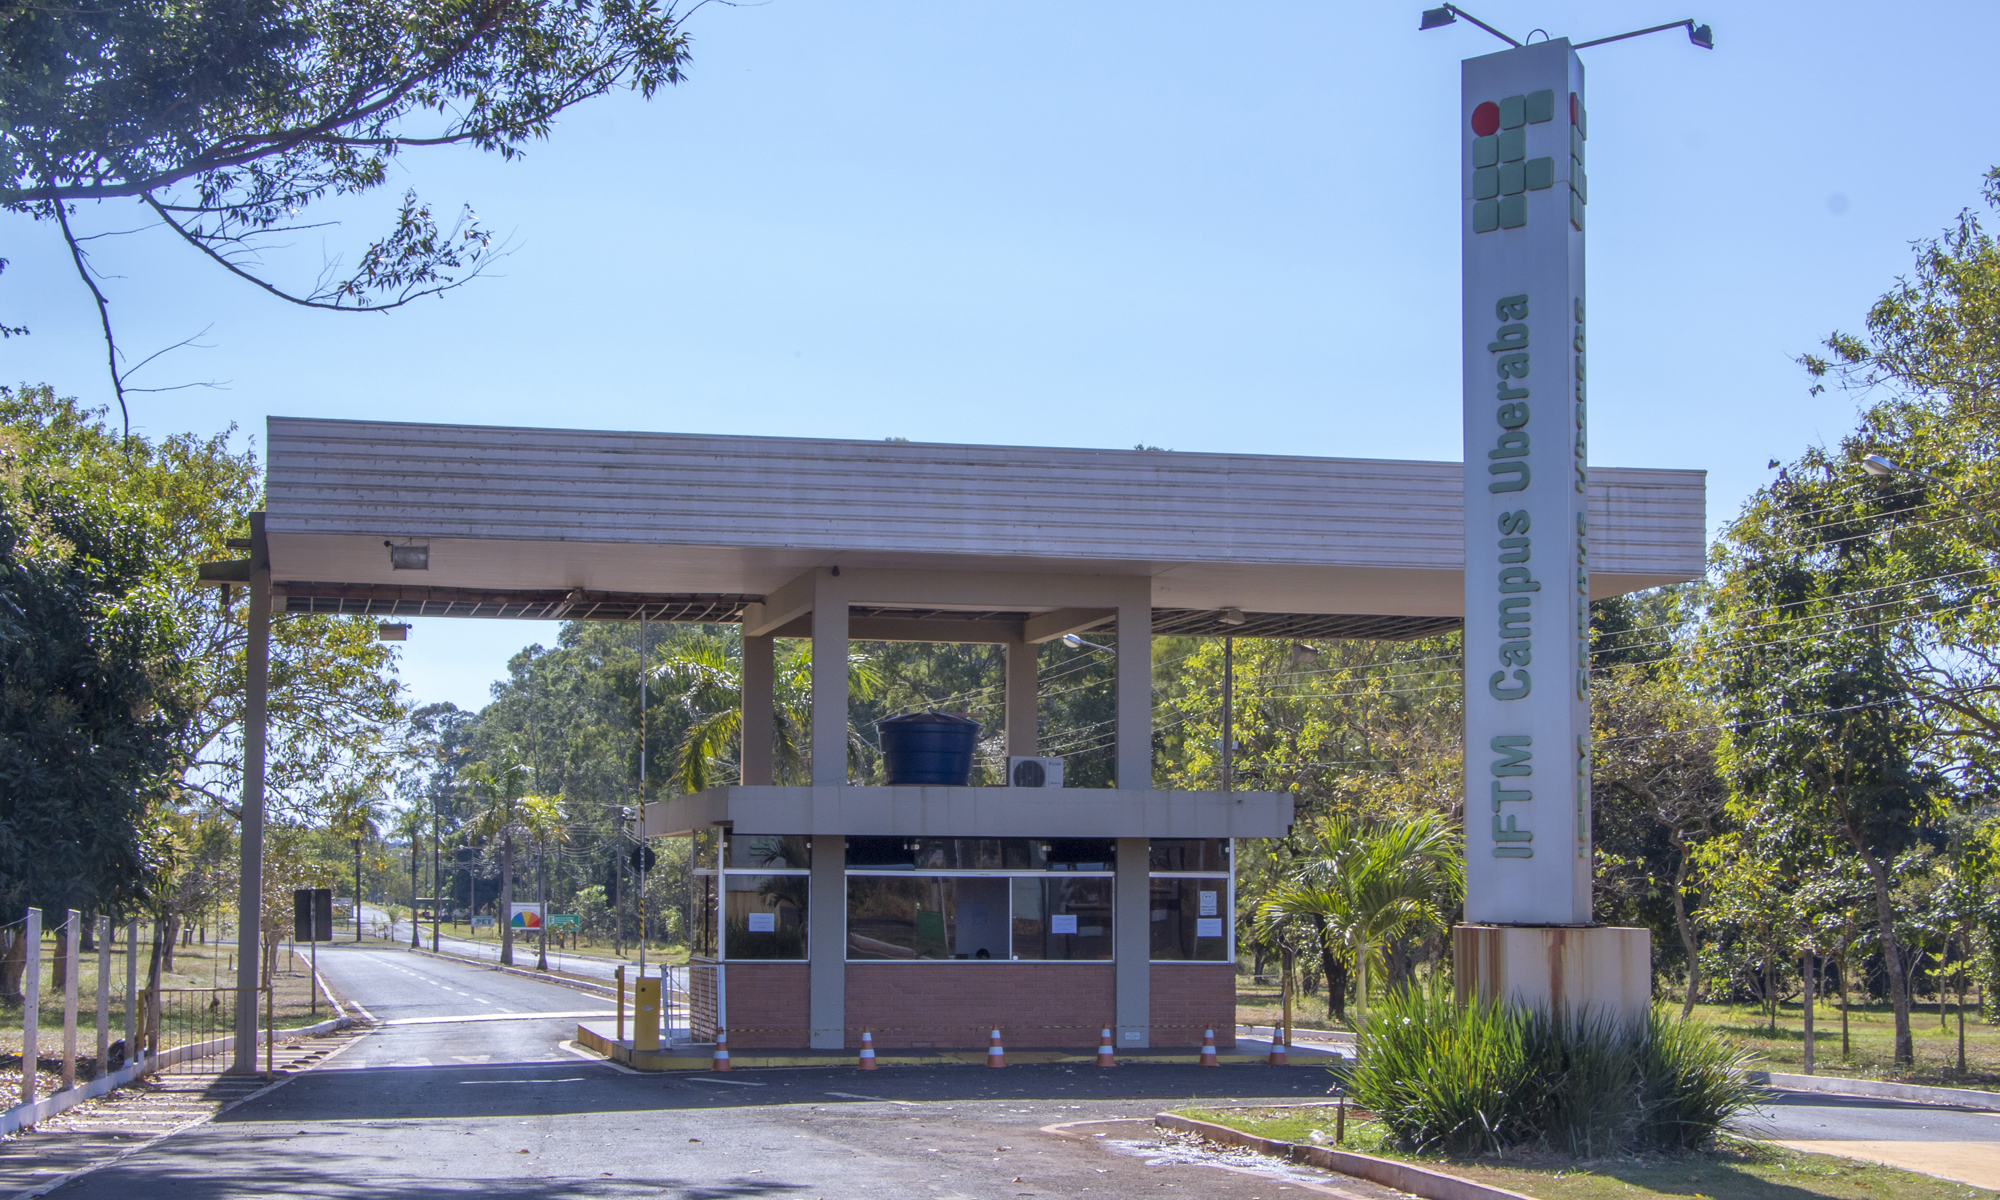 O Instituto Federal do Triangulo Mineiro (IFTM) Campus Patrocínio